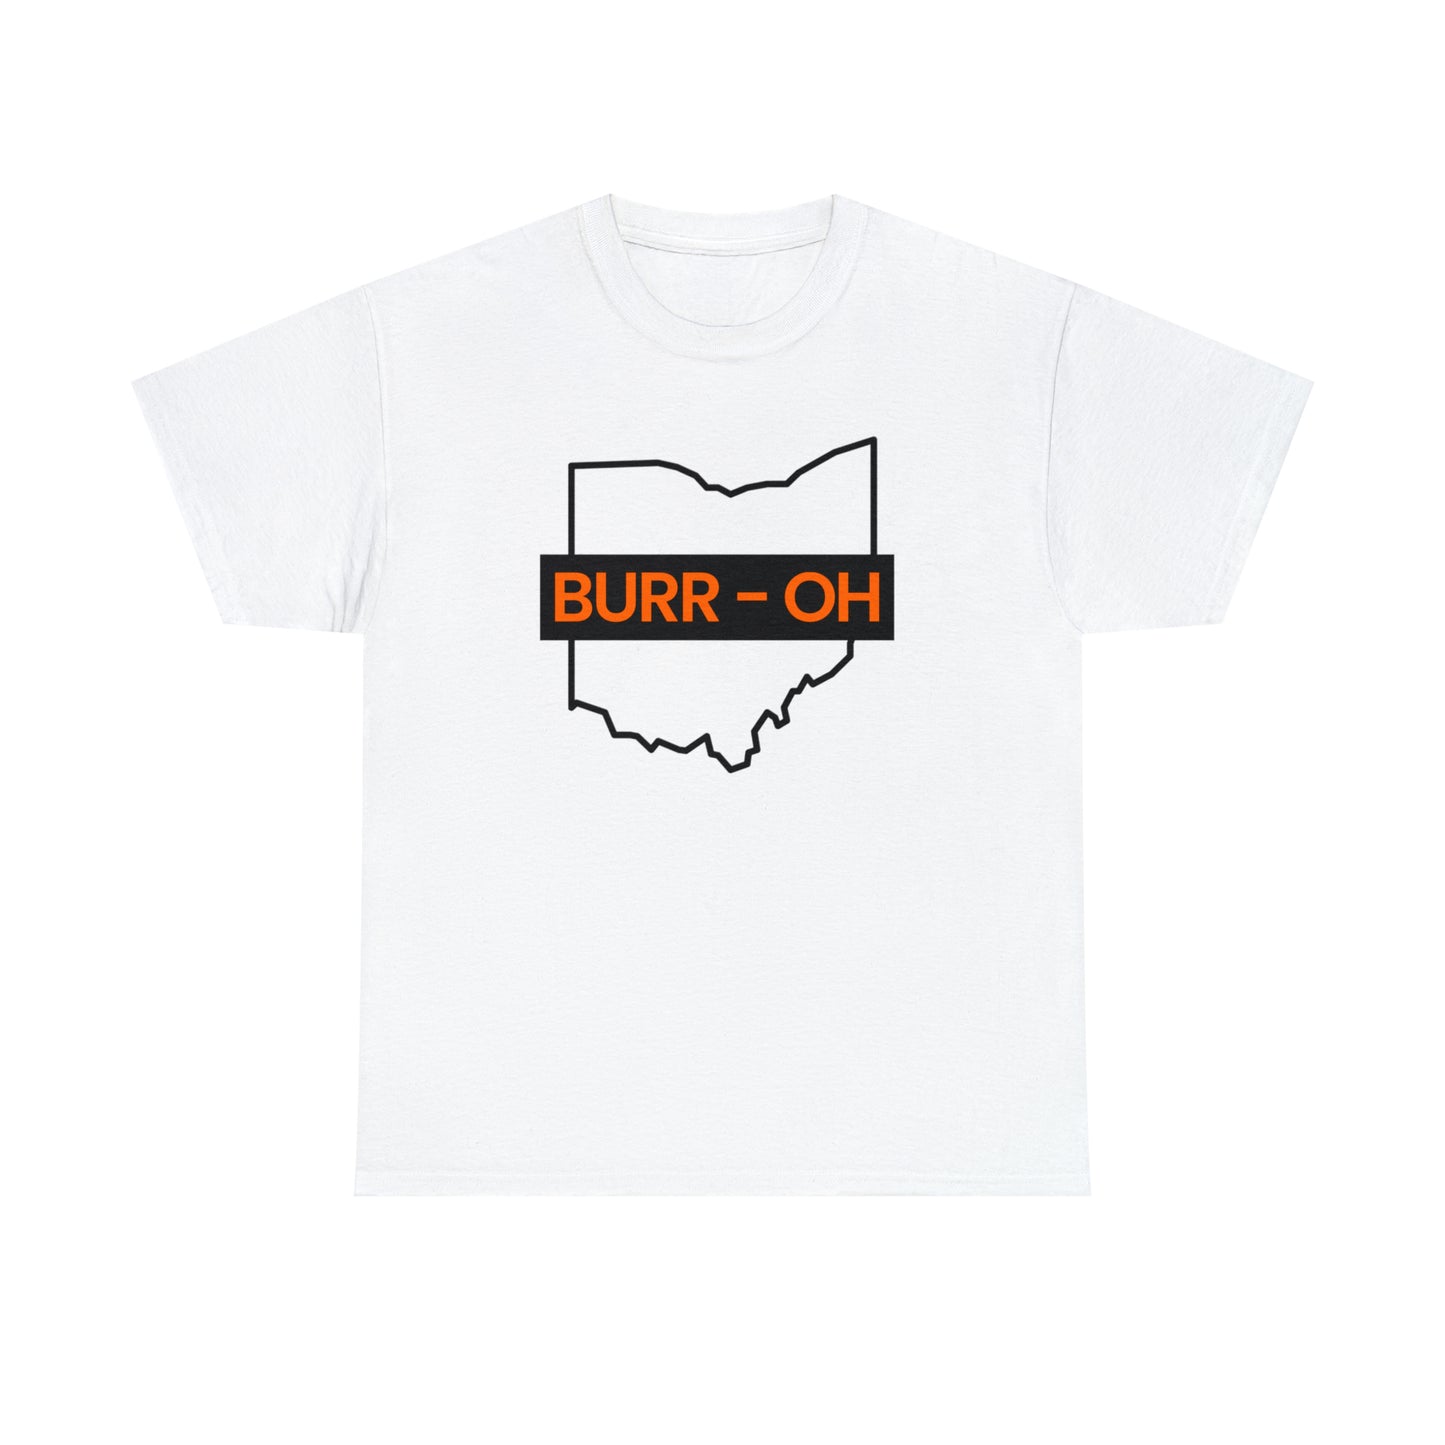 Cincinnati Bengals Joe Burrow Tshirt